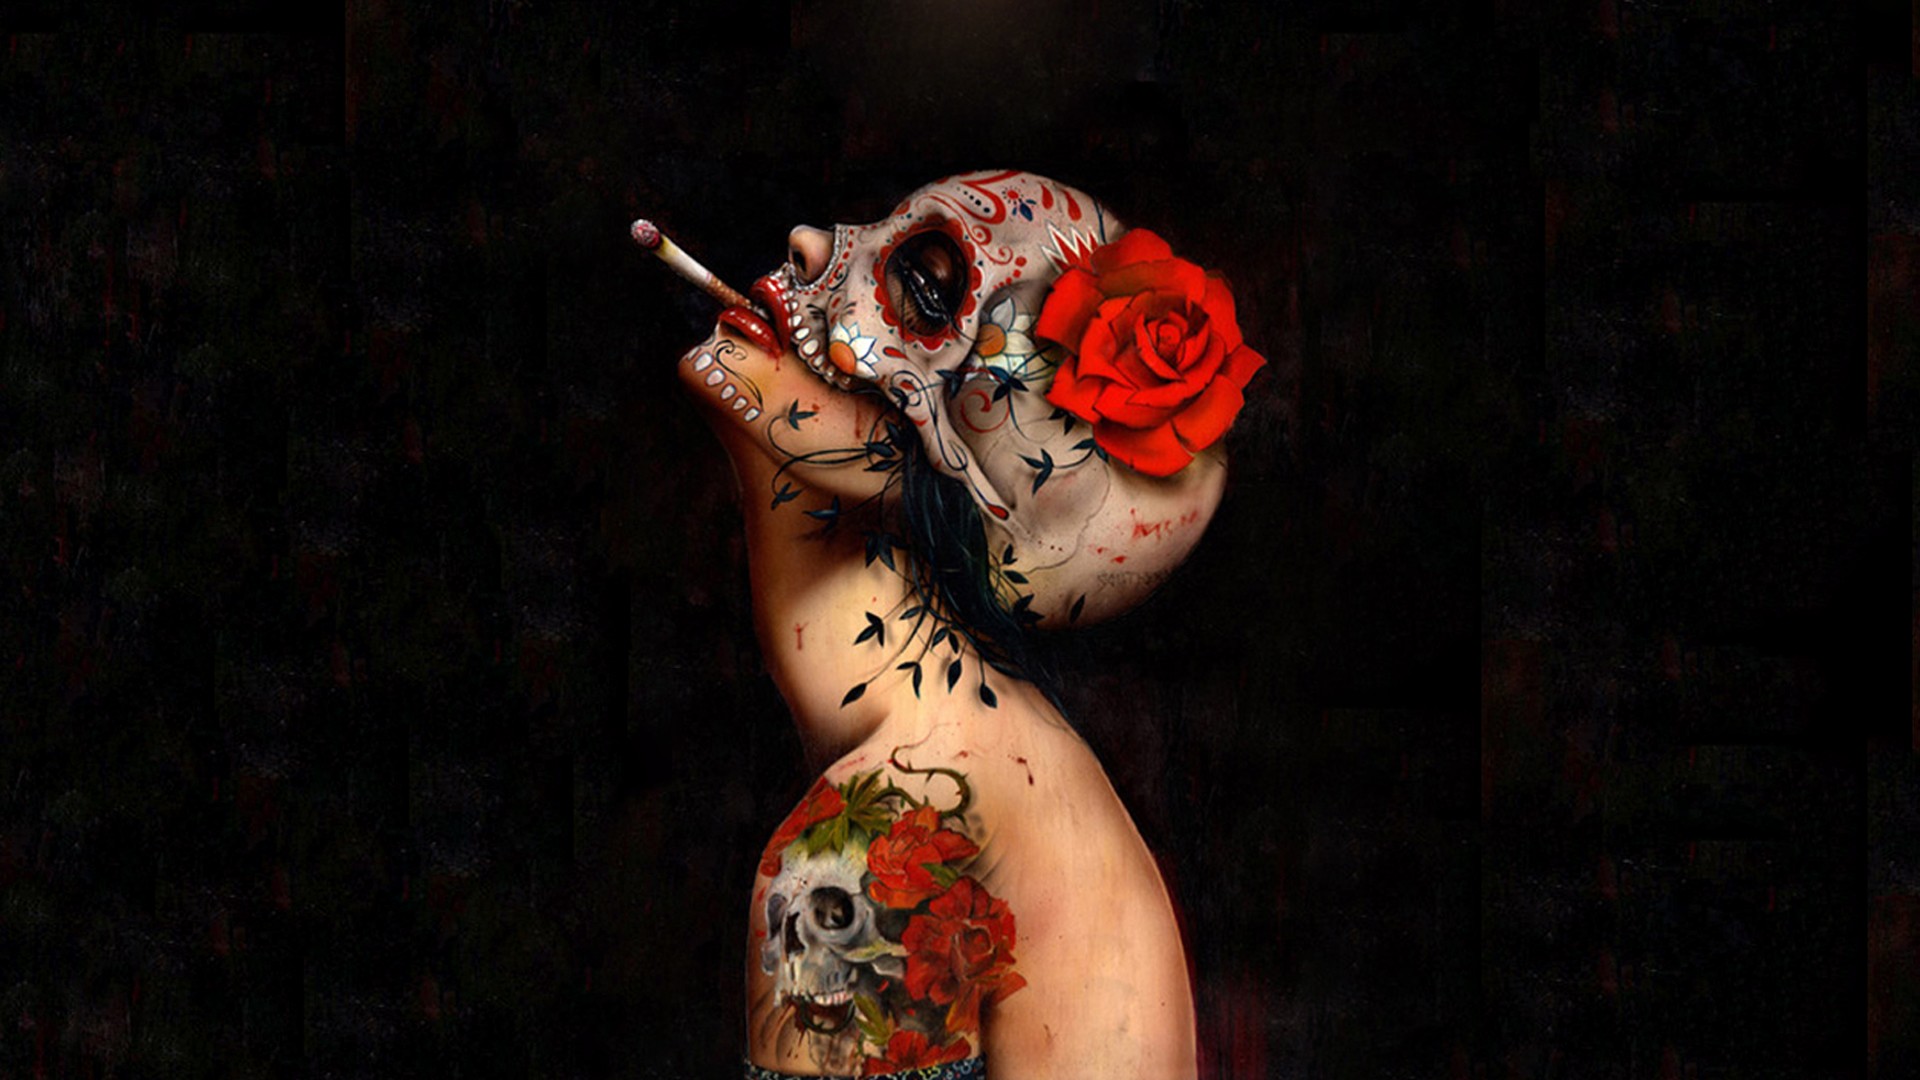 People 1920x1080 artwork women Sugar Skull Dia de los Muertos drawing smoking skull inked girls simple background